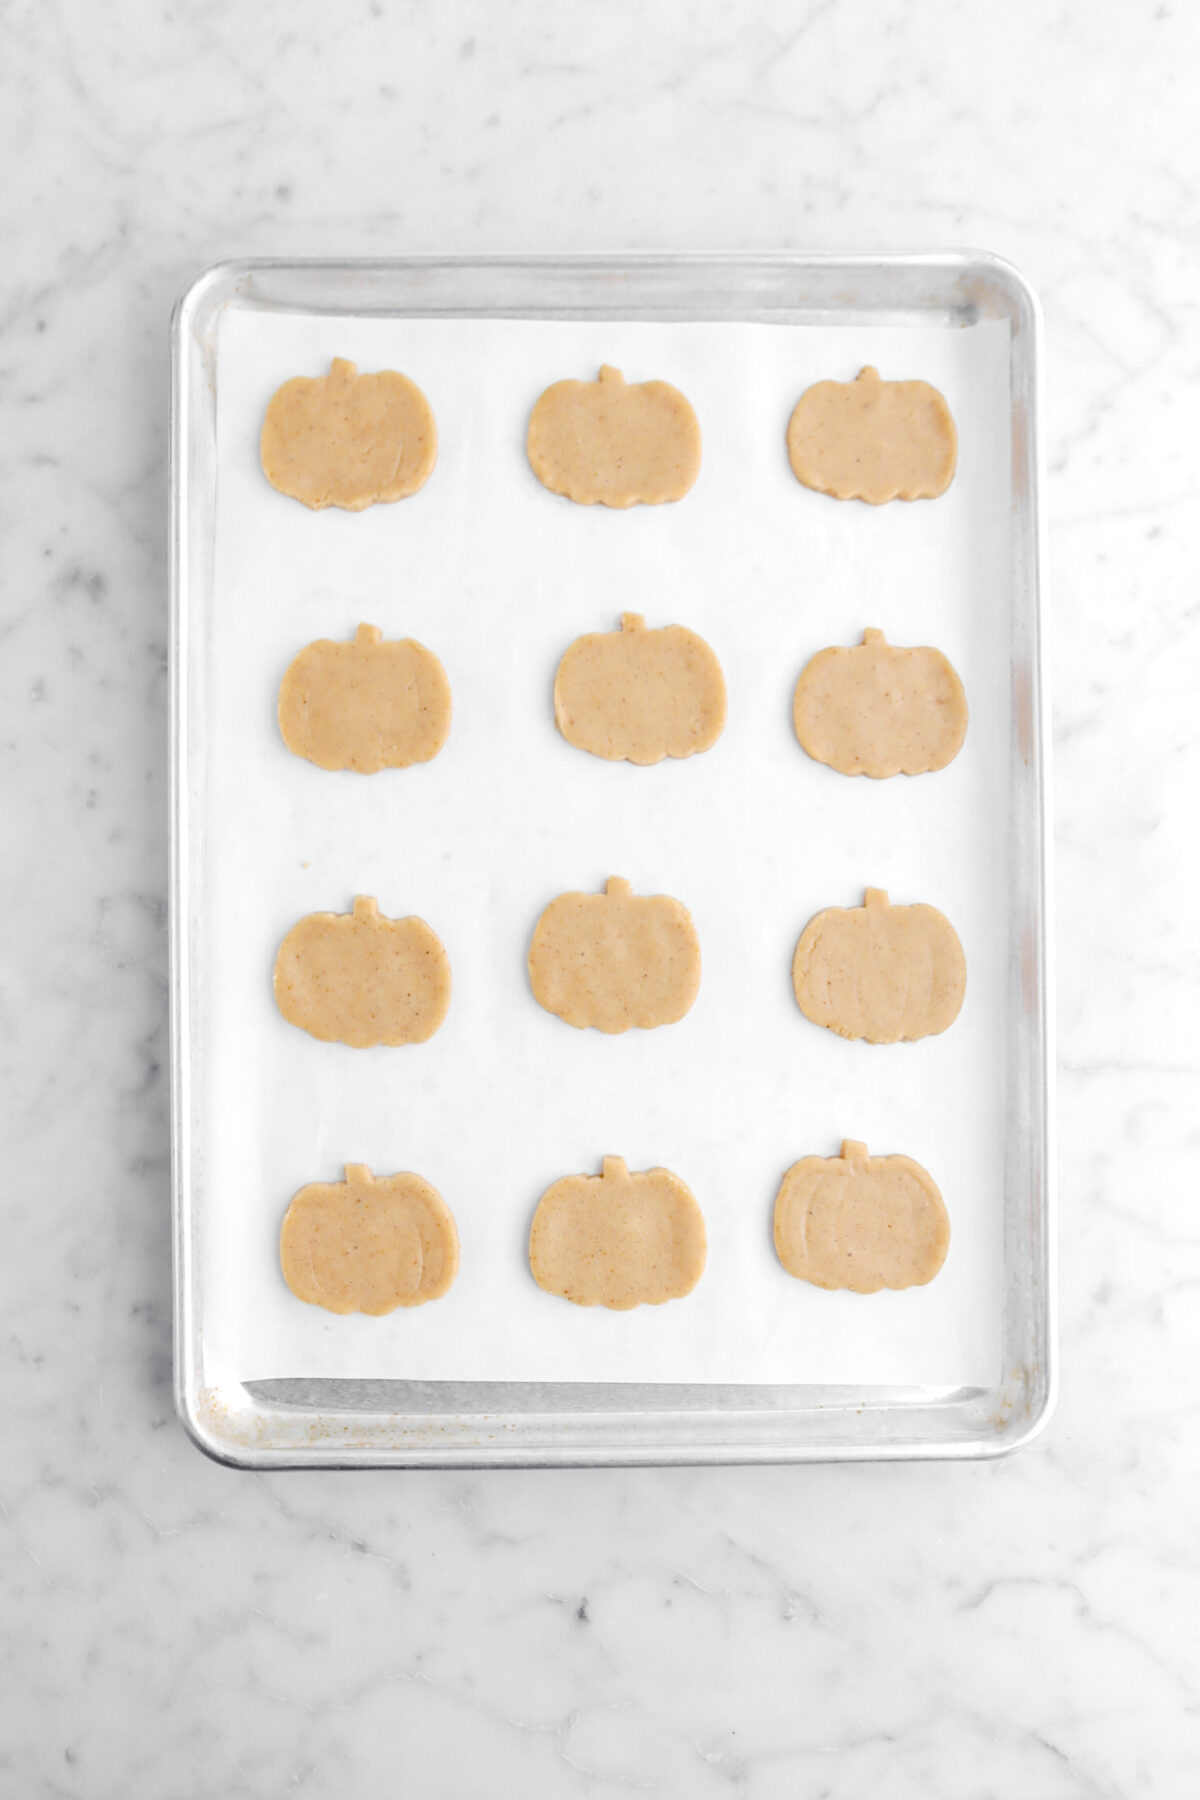 pumpkin shaped cookie dough on lined sheet pan.